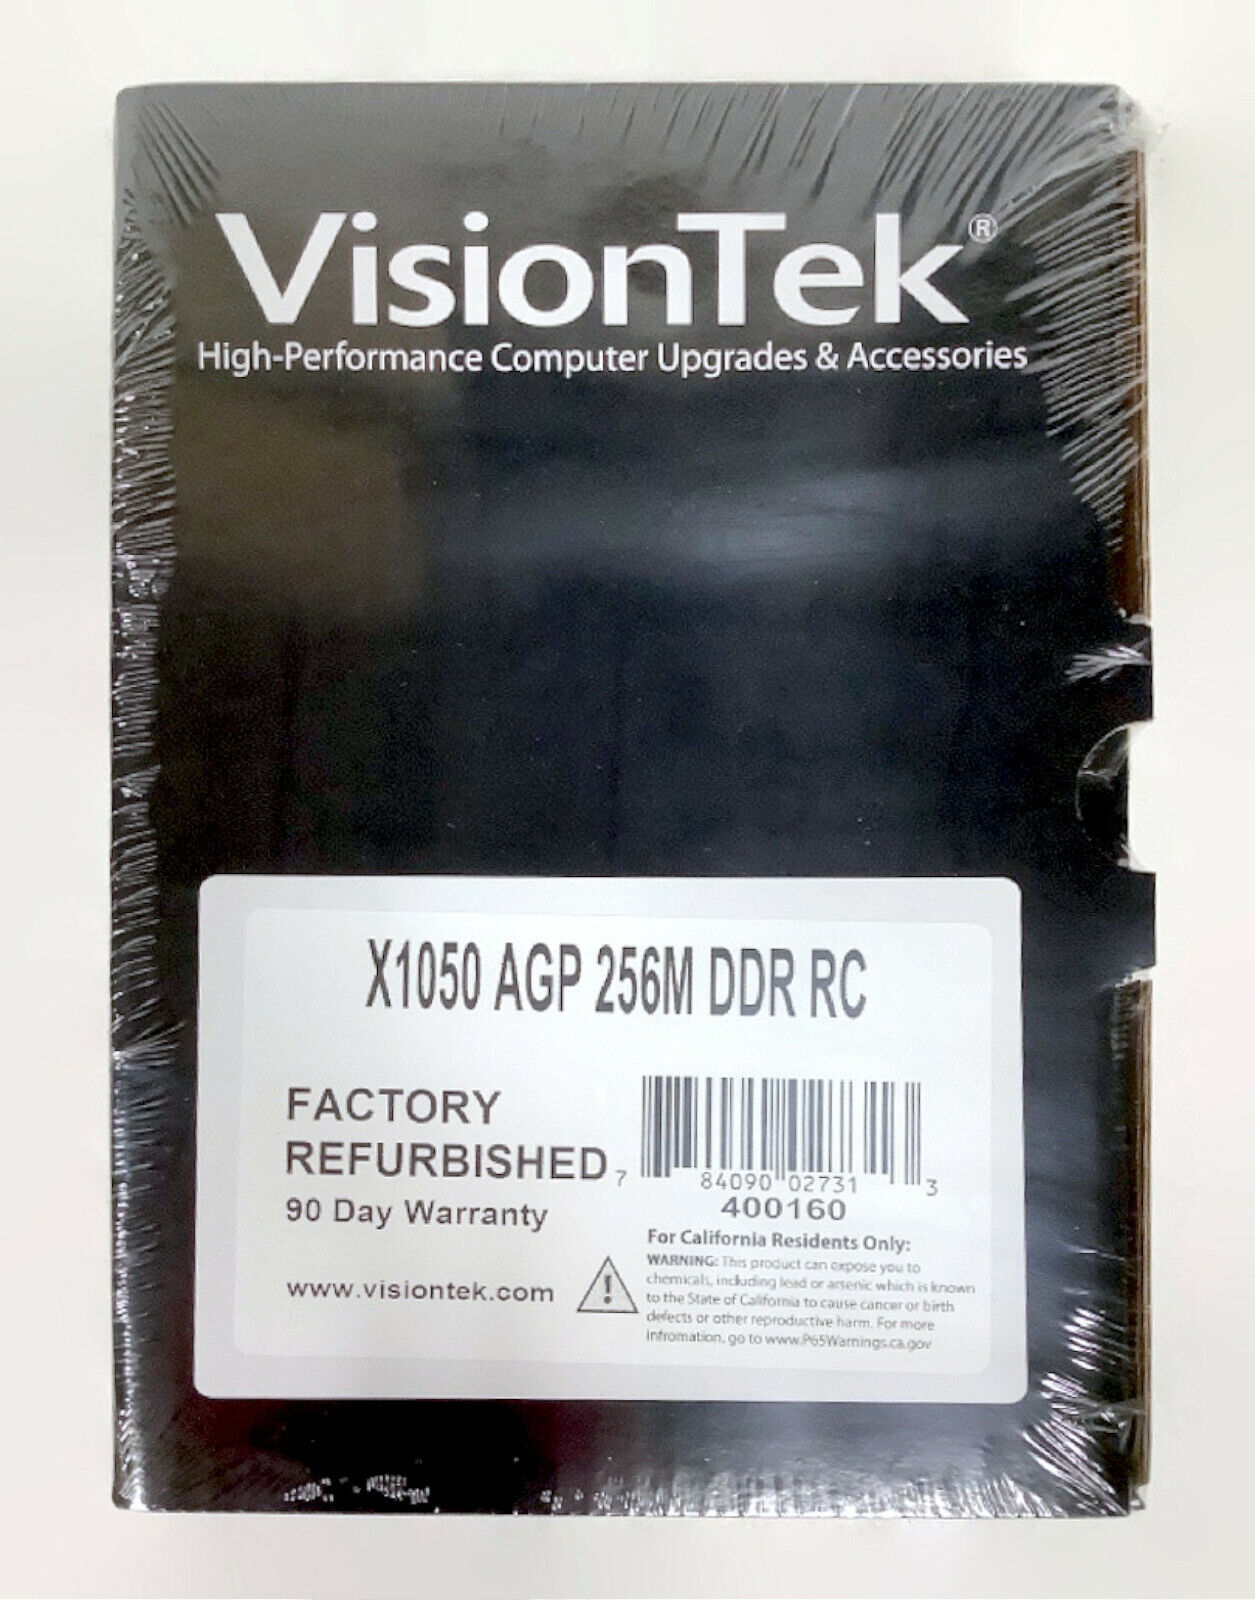 VisionTek 400160 ATI Radeon X1050 AGP 256M DDR RC VGA Video Graphics Card